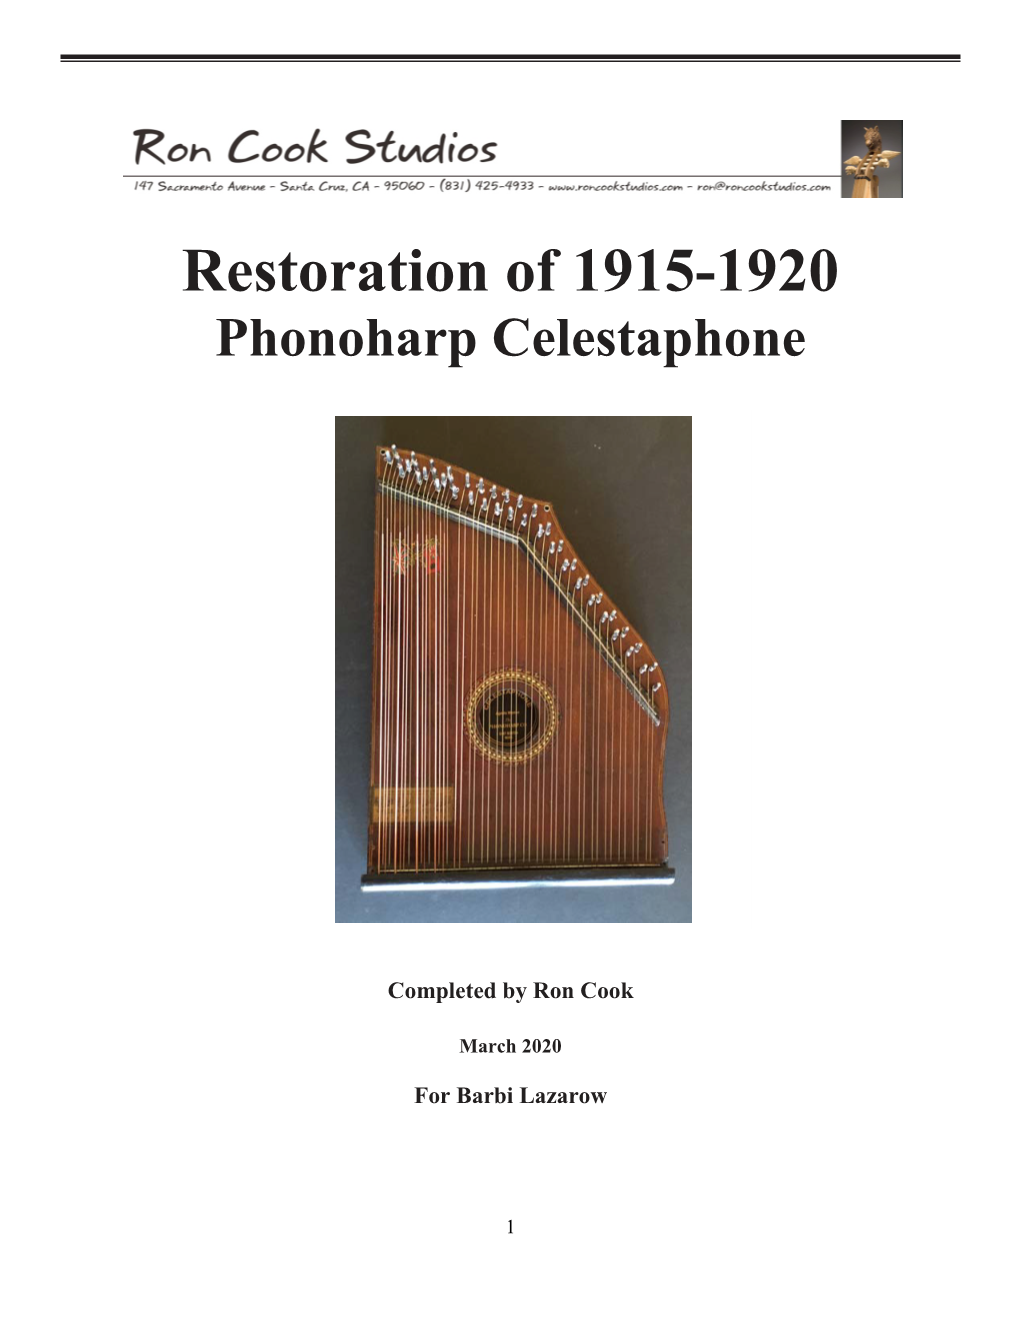 Restoration of 1915-1920 Phonoharp Celestaphone